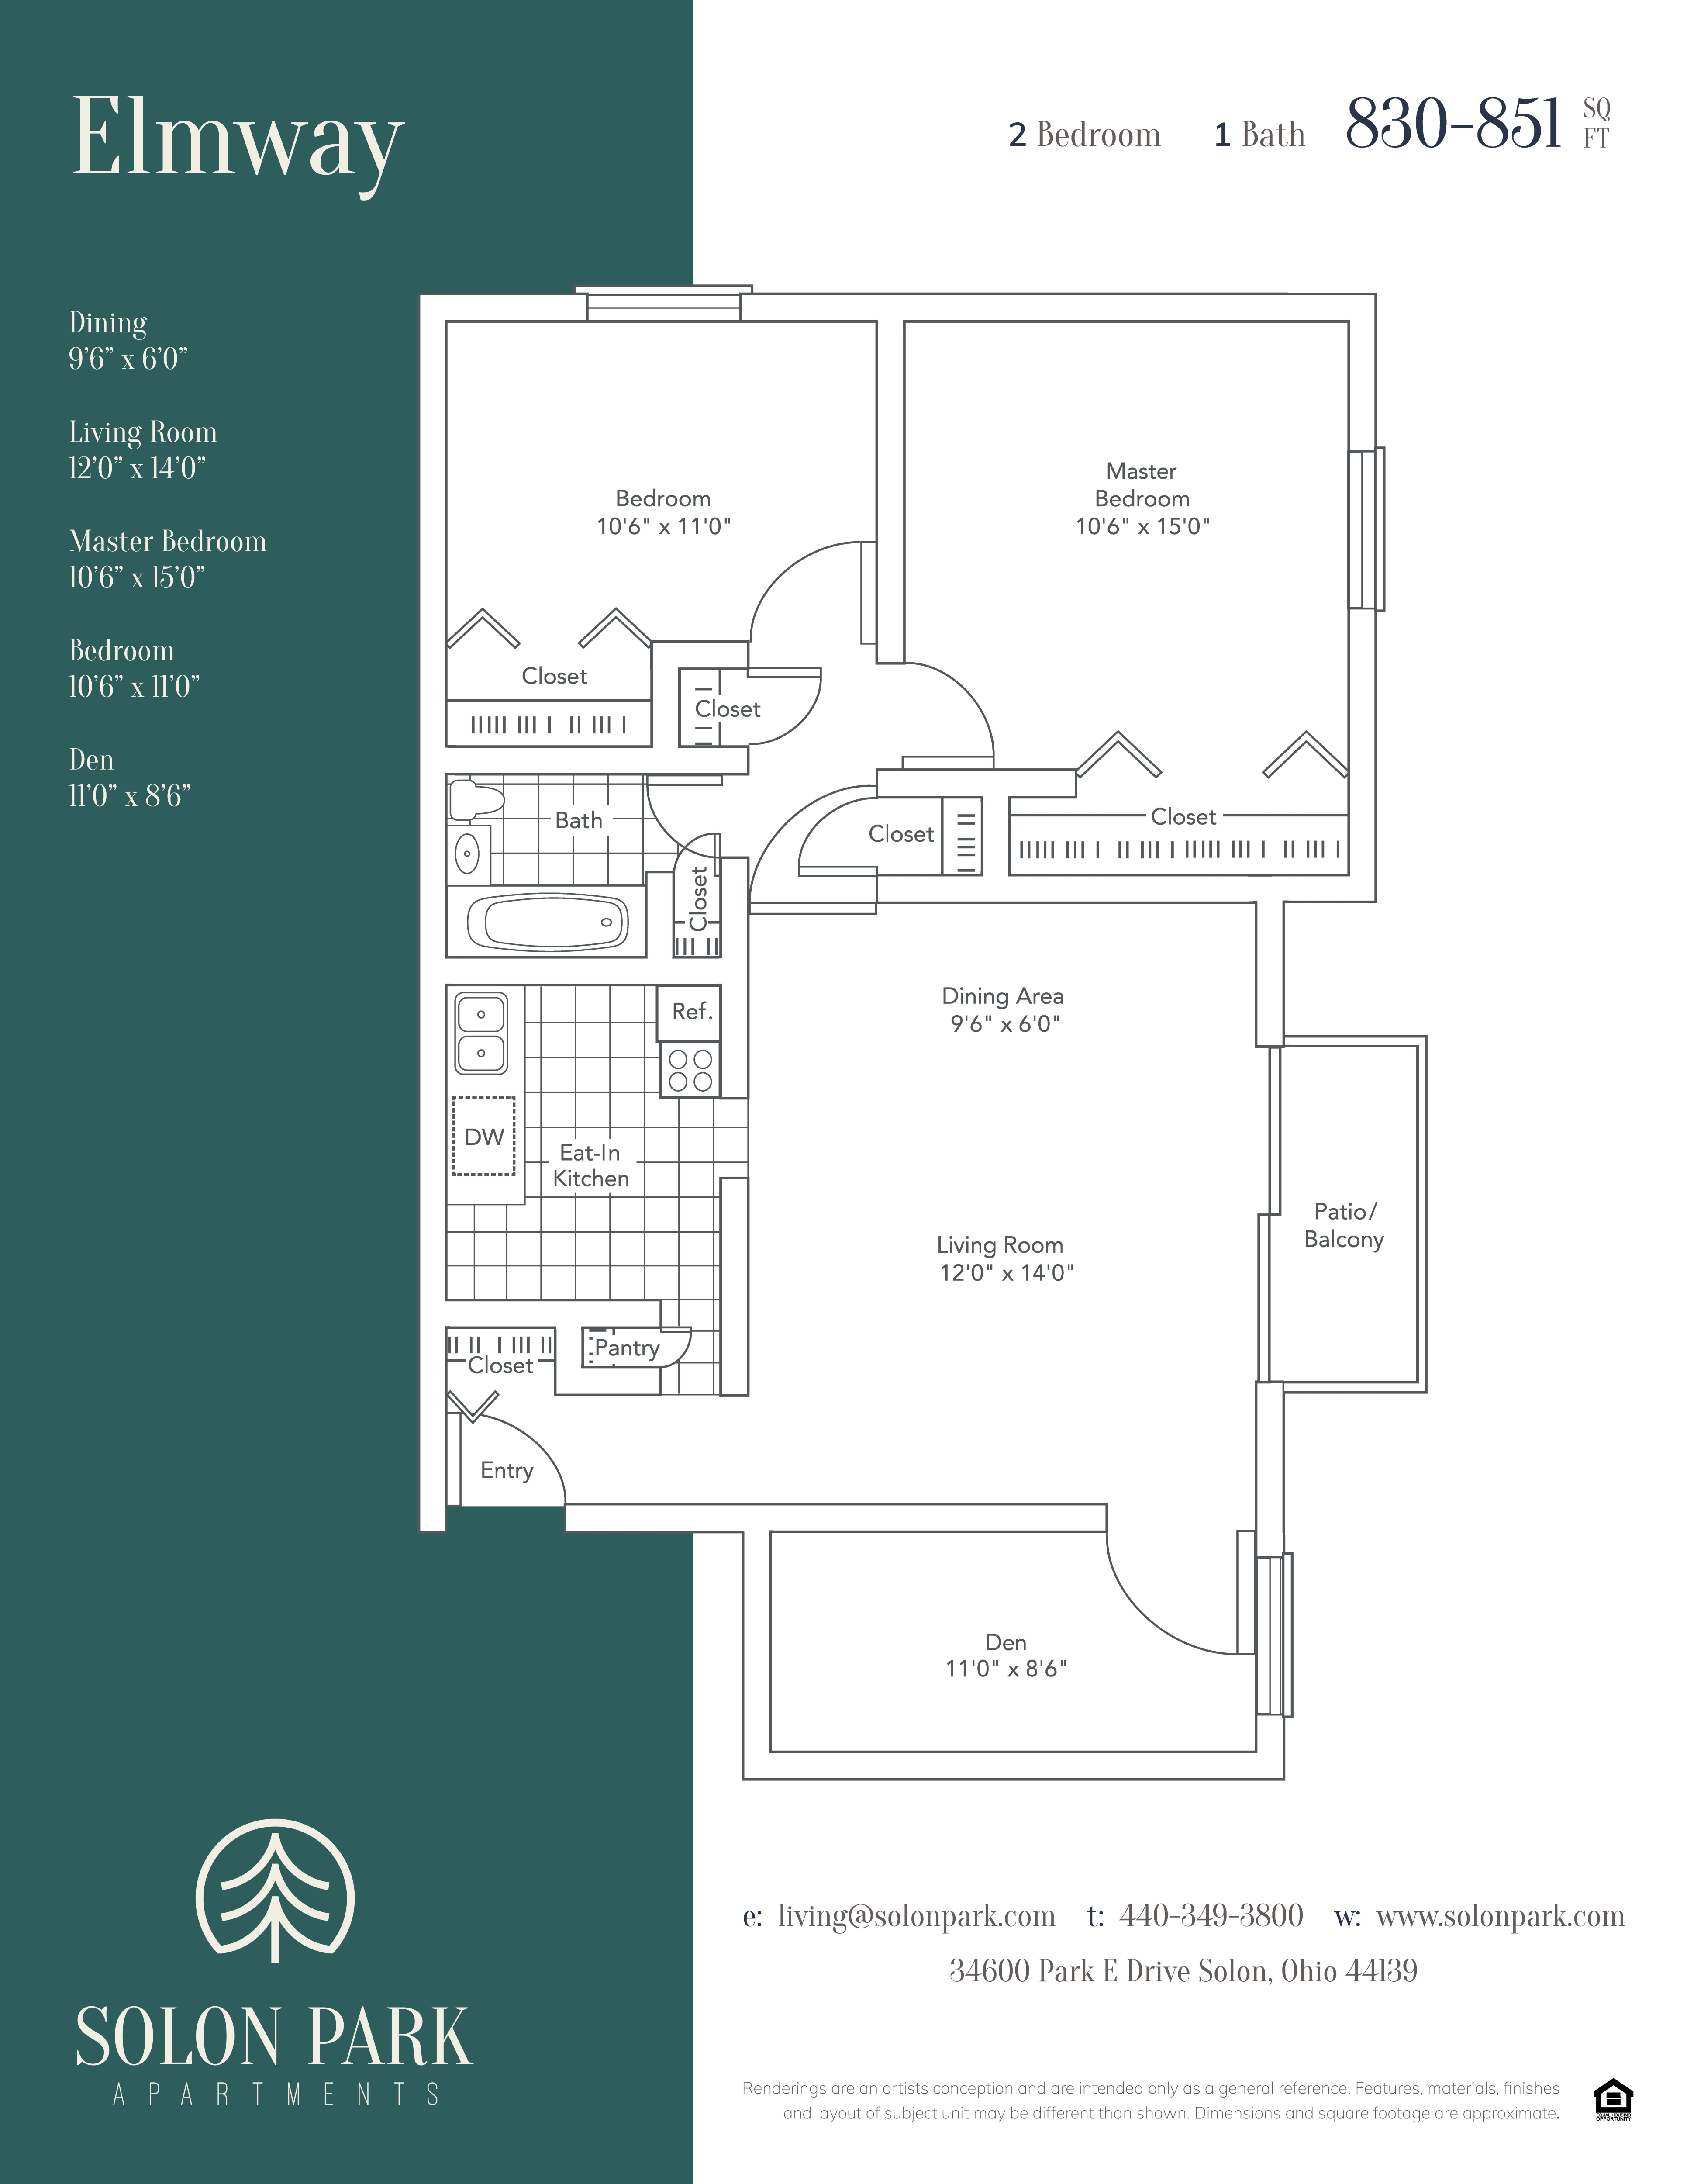 Solon Park Floorplan Sheet Elmway.jpg